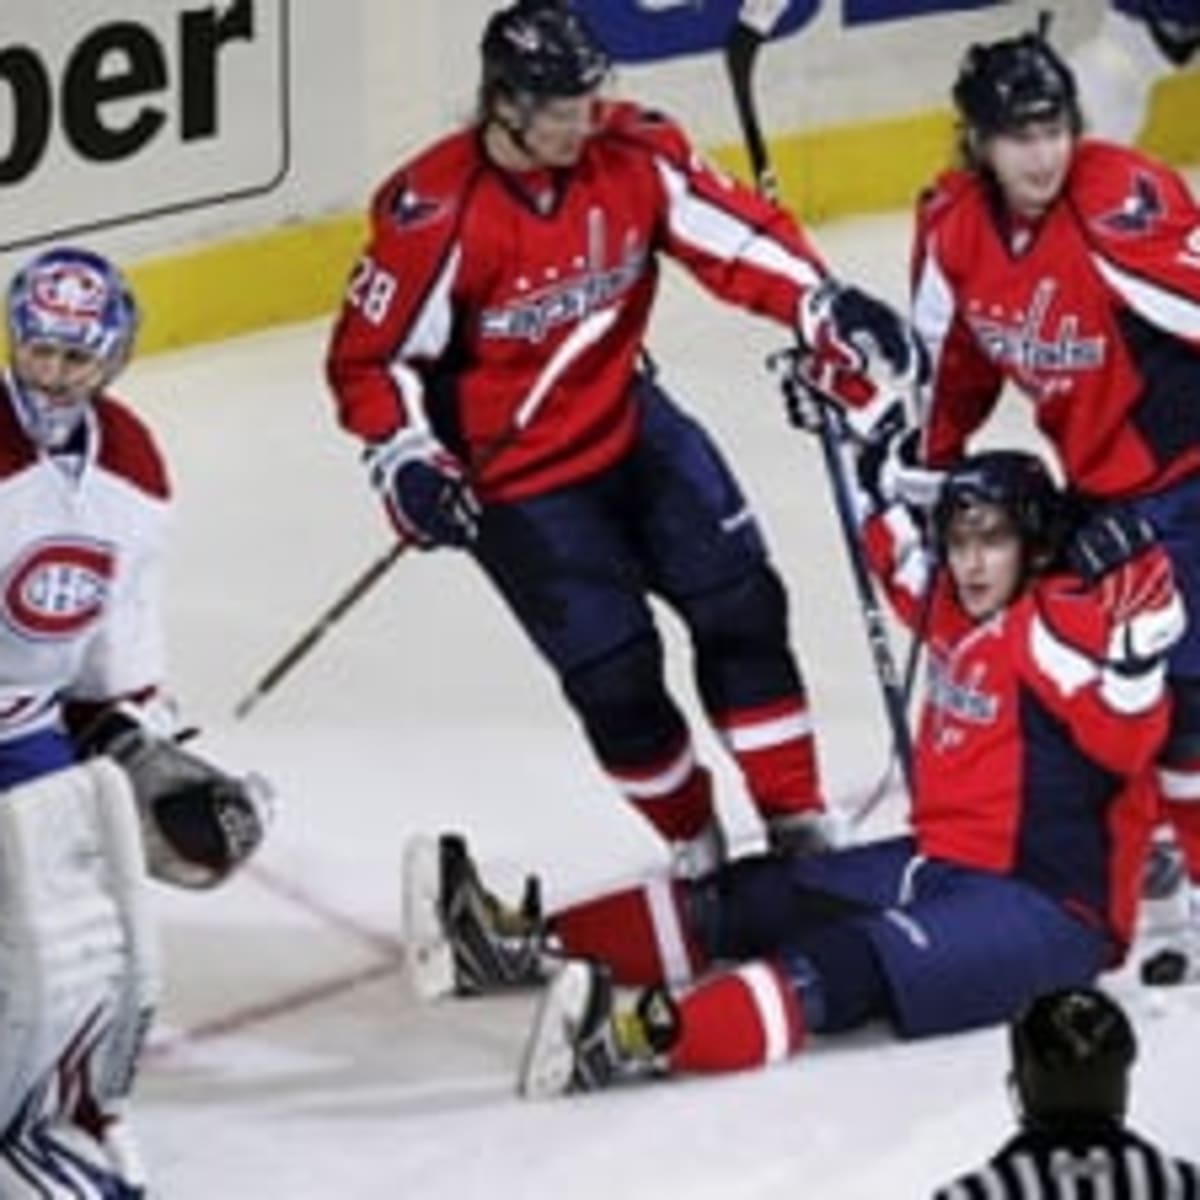 Kovalev leads Canadiens over sliding Blackhawks